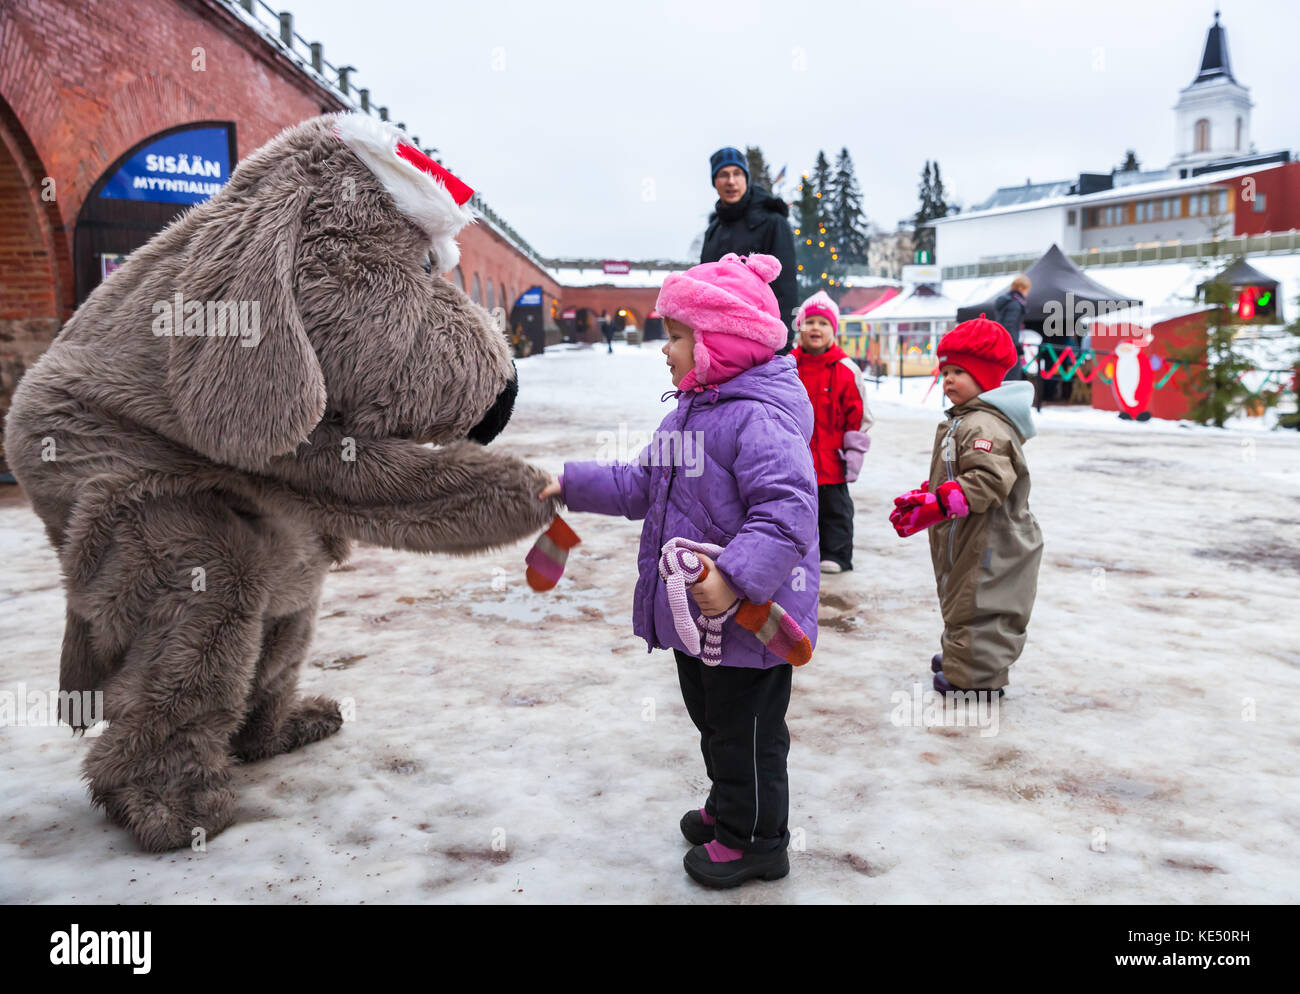 Hamina, Finland - December 13, 2014: Christmas fair in Hamina bastion, animators in animal costumes play with children Stock Photo